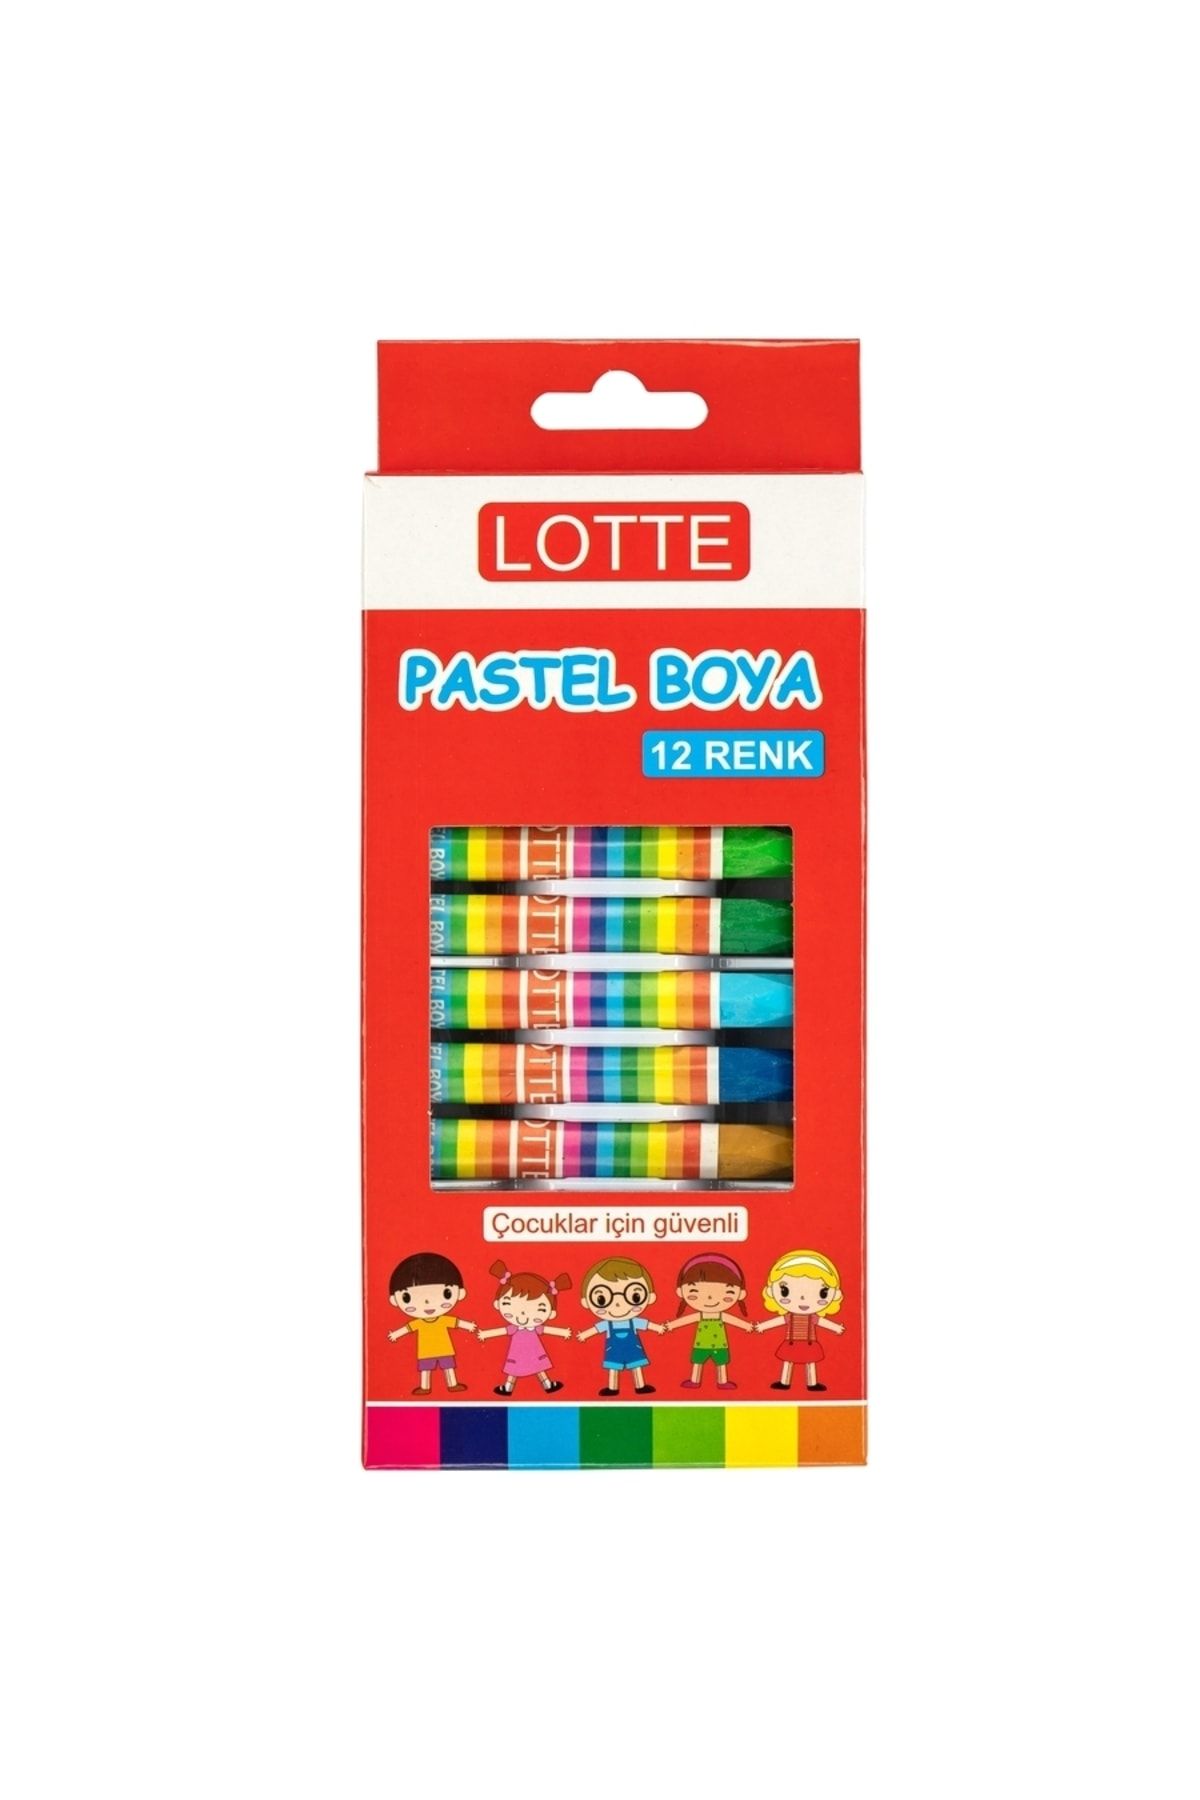 Bigpoint Lotte Pastel Boya 12 Renk